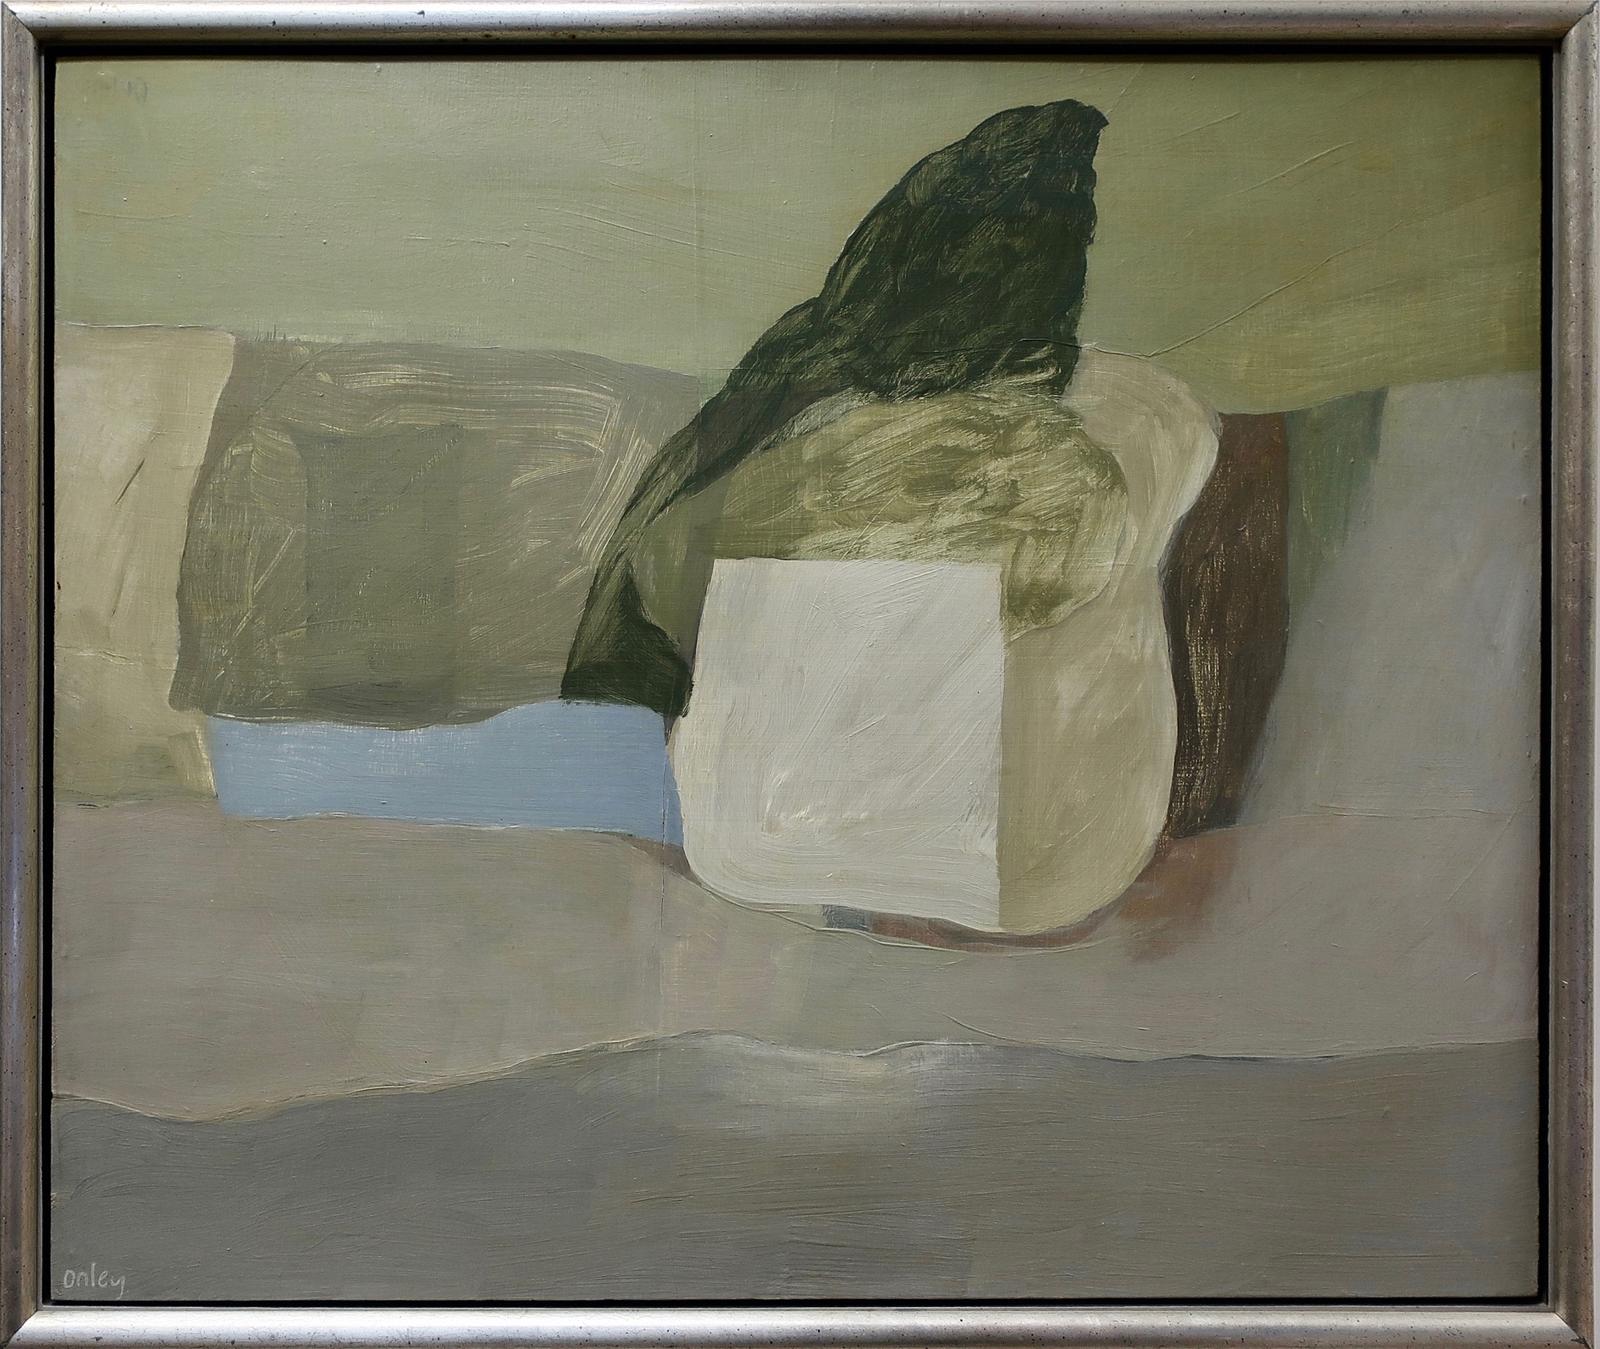 Norman Anthony (Toni) Onley (1928-2004) - Ethereal Landscape